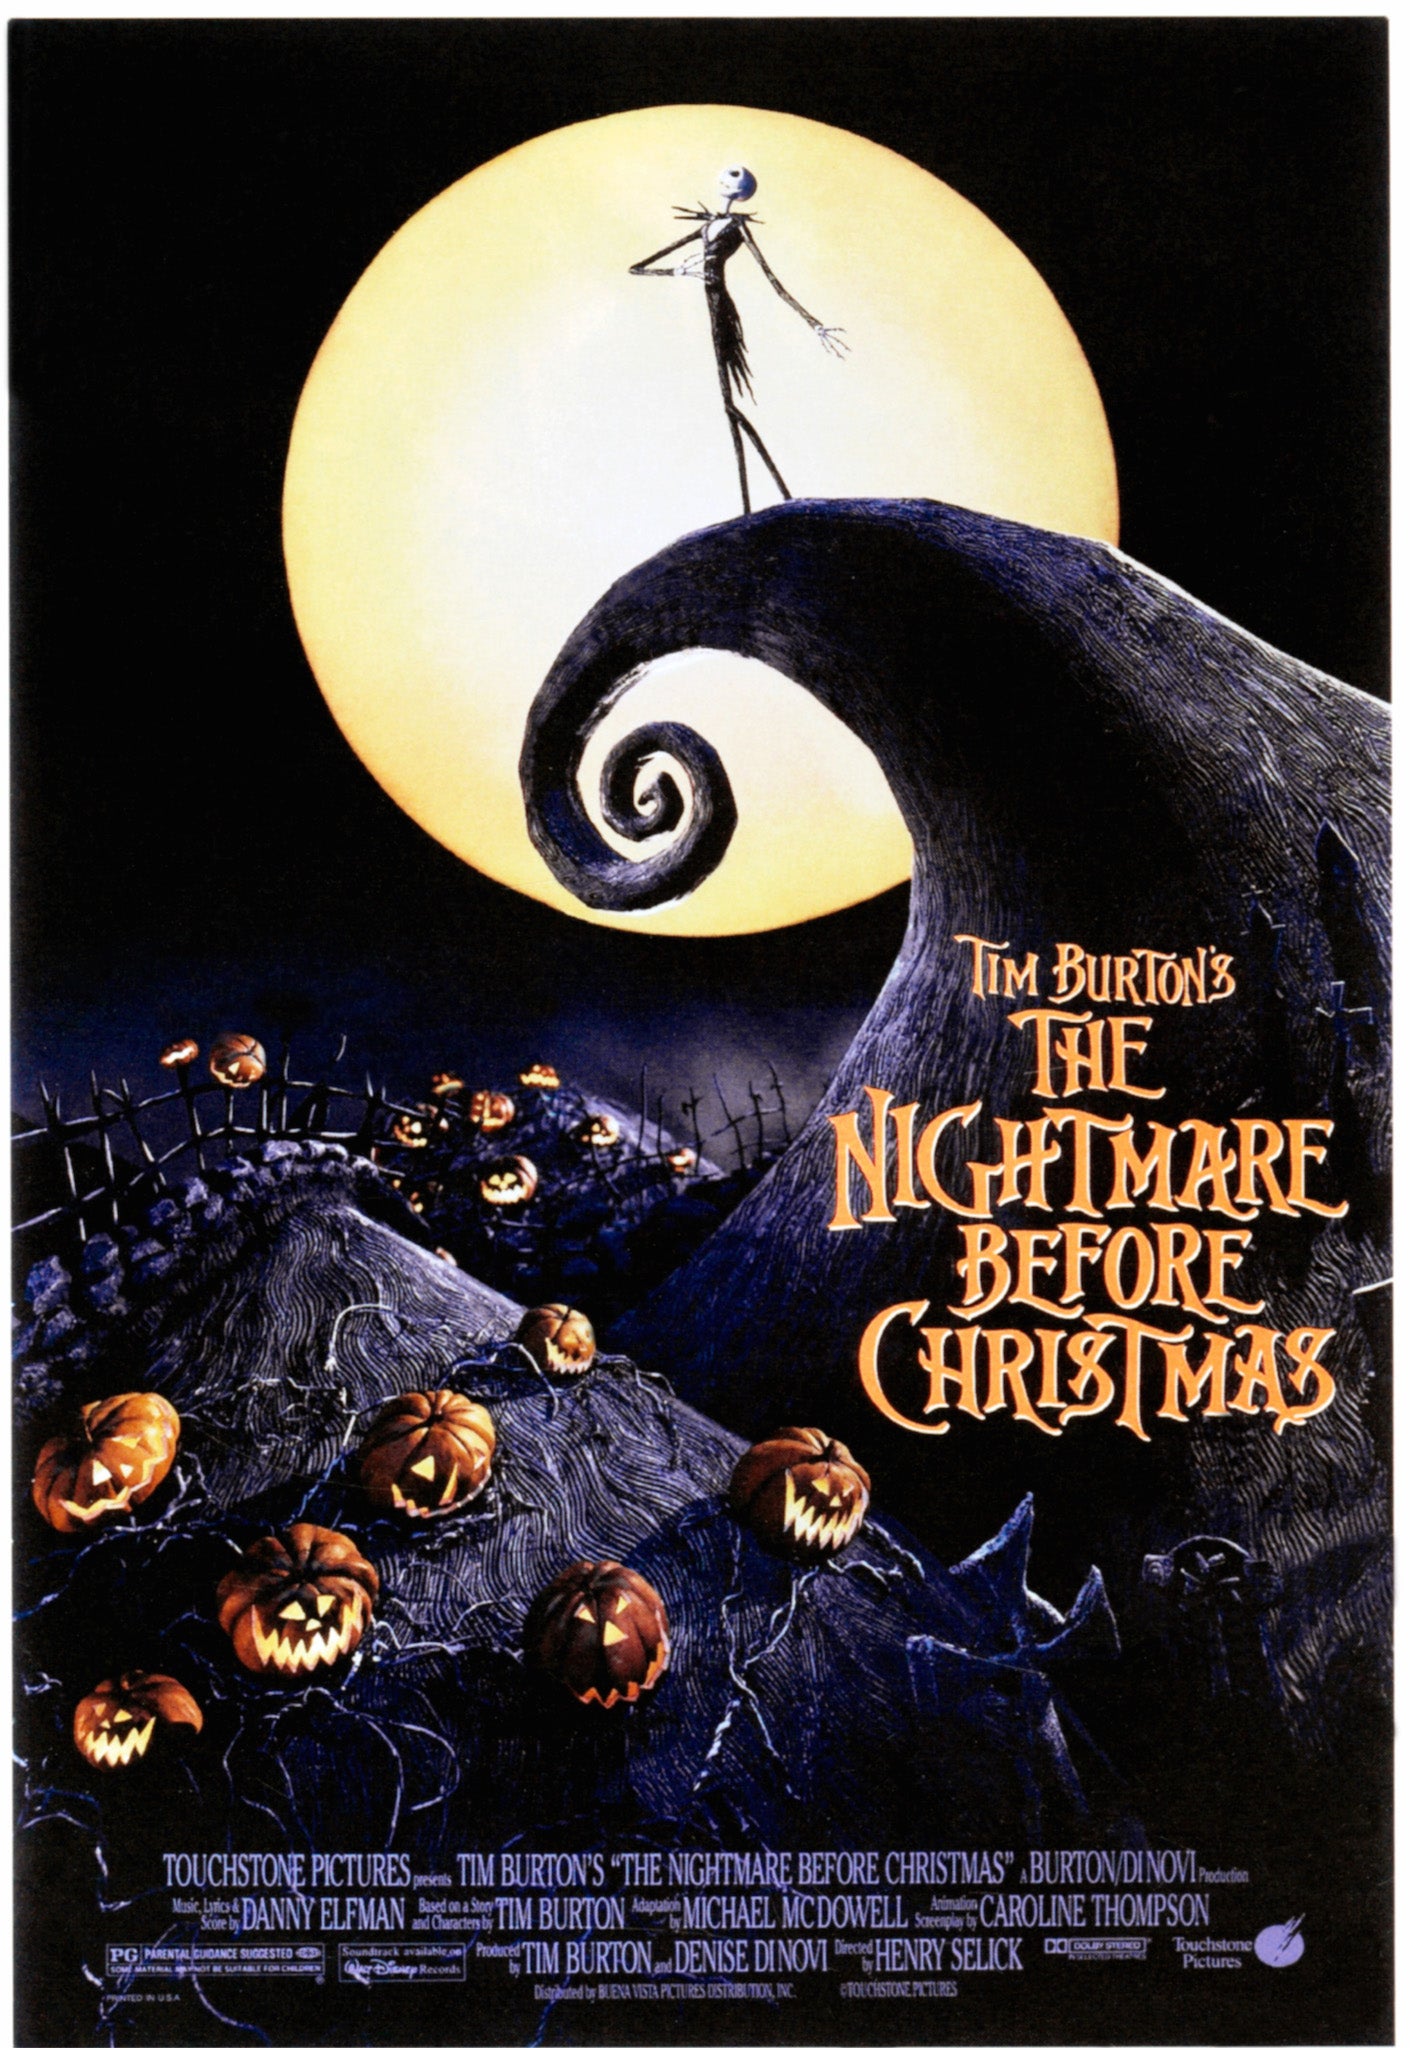 Jack Skellington is the Pumpkin King of Halloween Town in The Nightmare Before Christmas